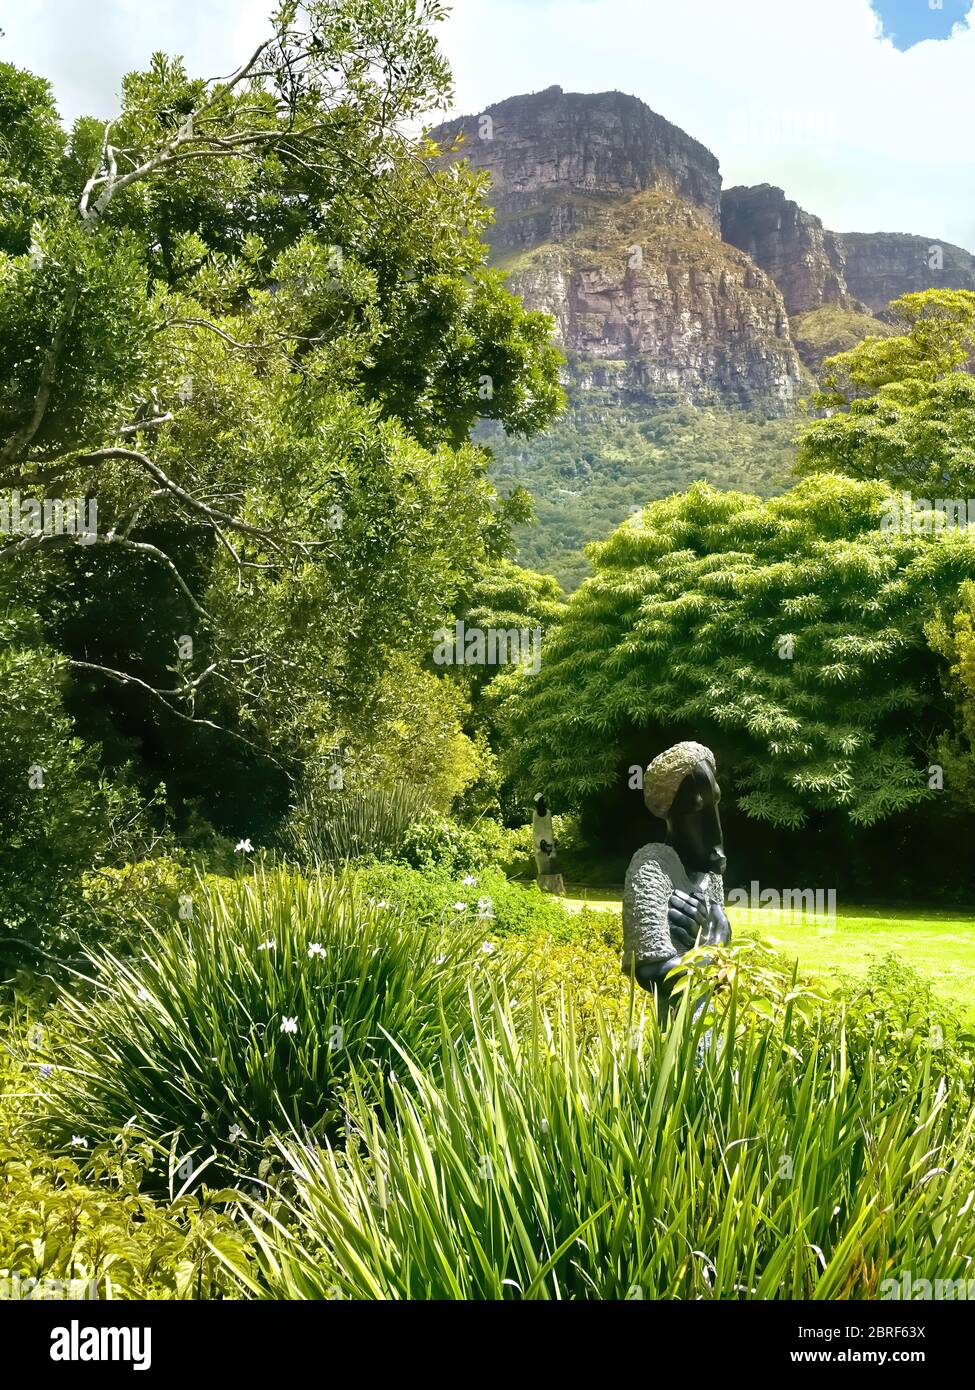 Kirstenbosch Botanical Gardens, South Africa Stock Photo